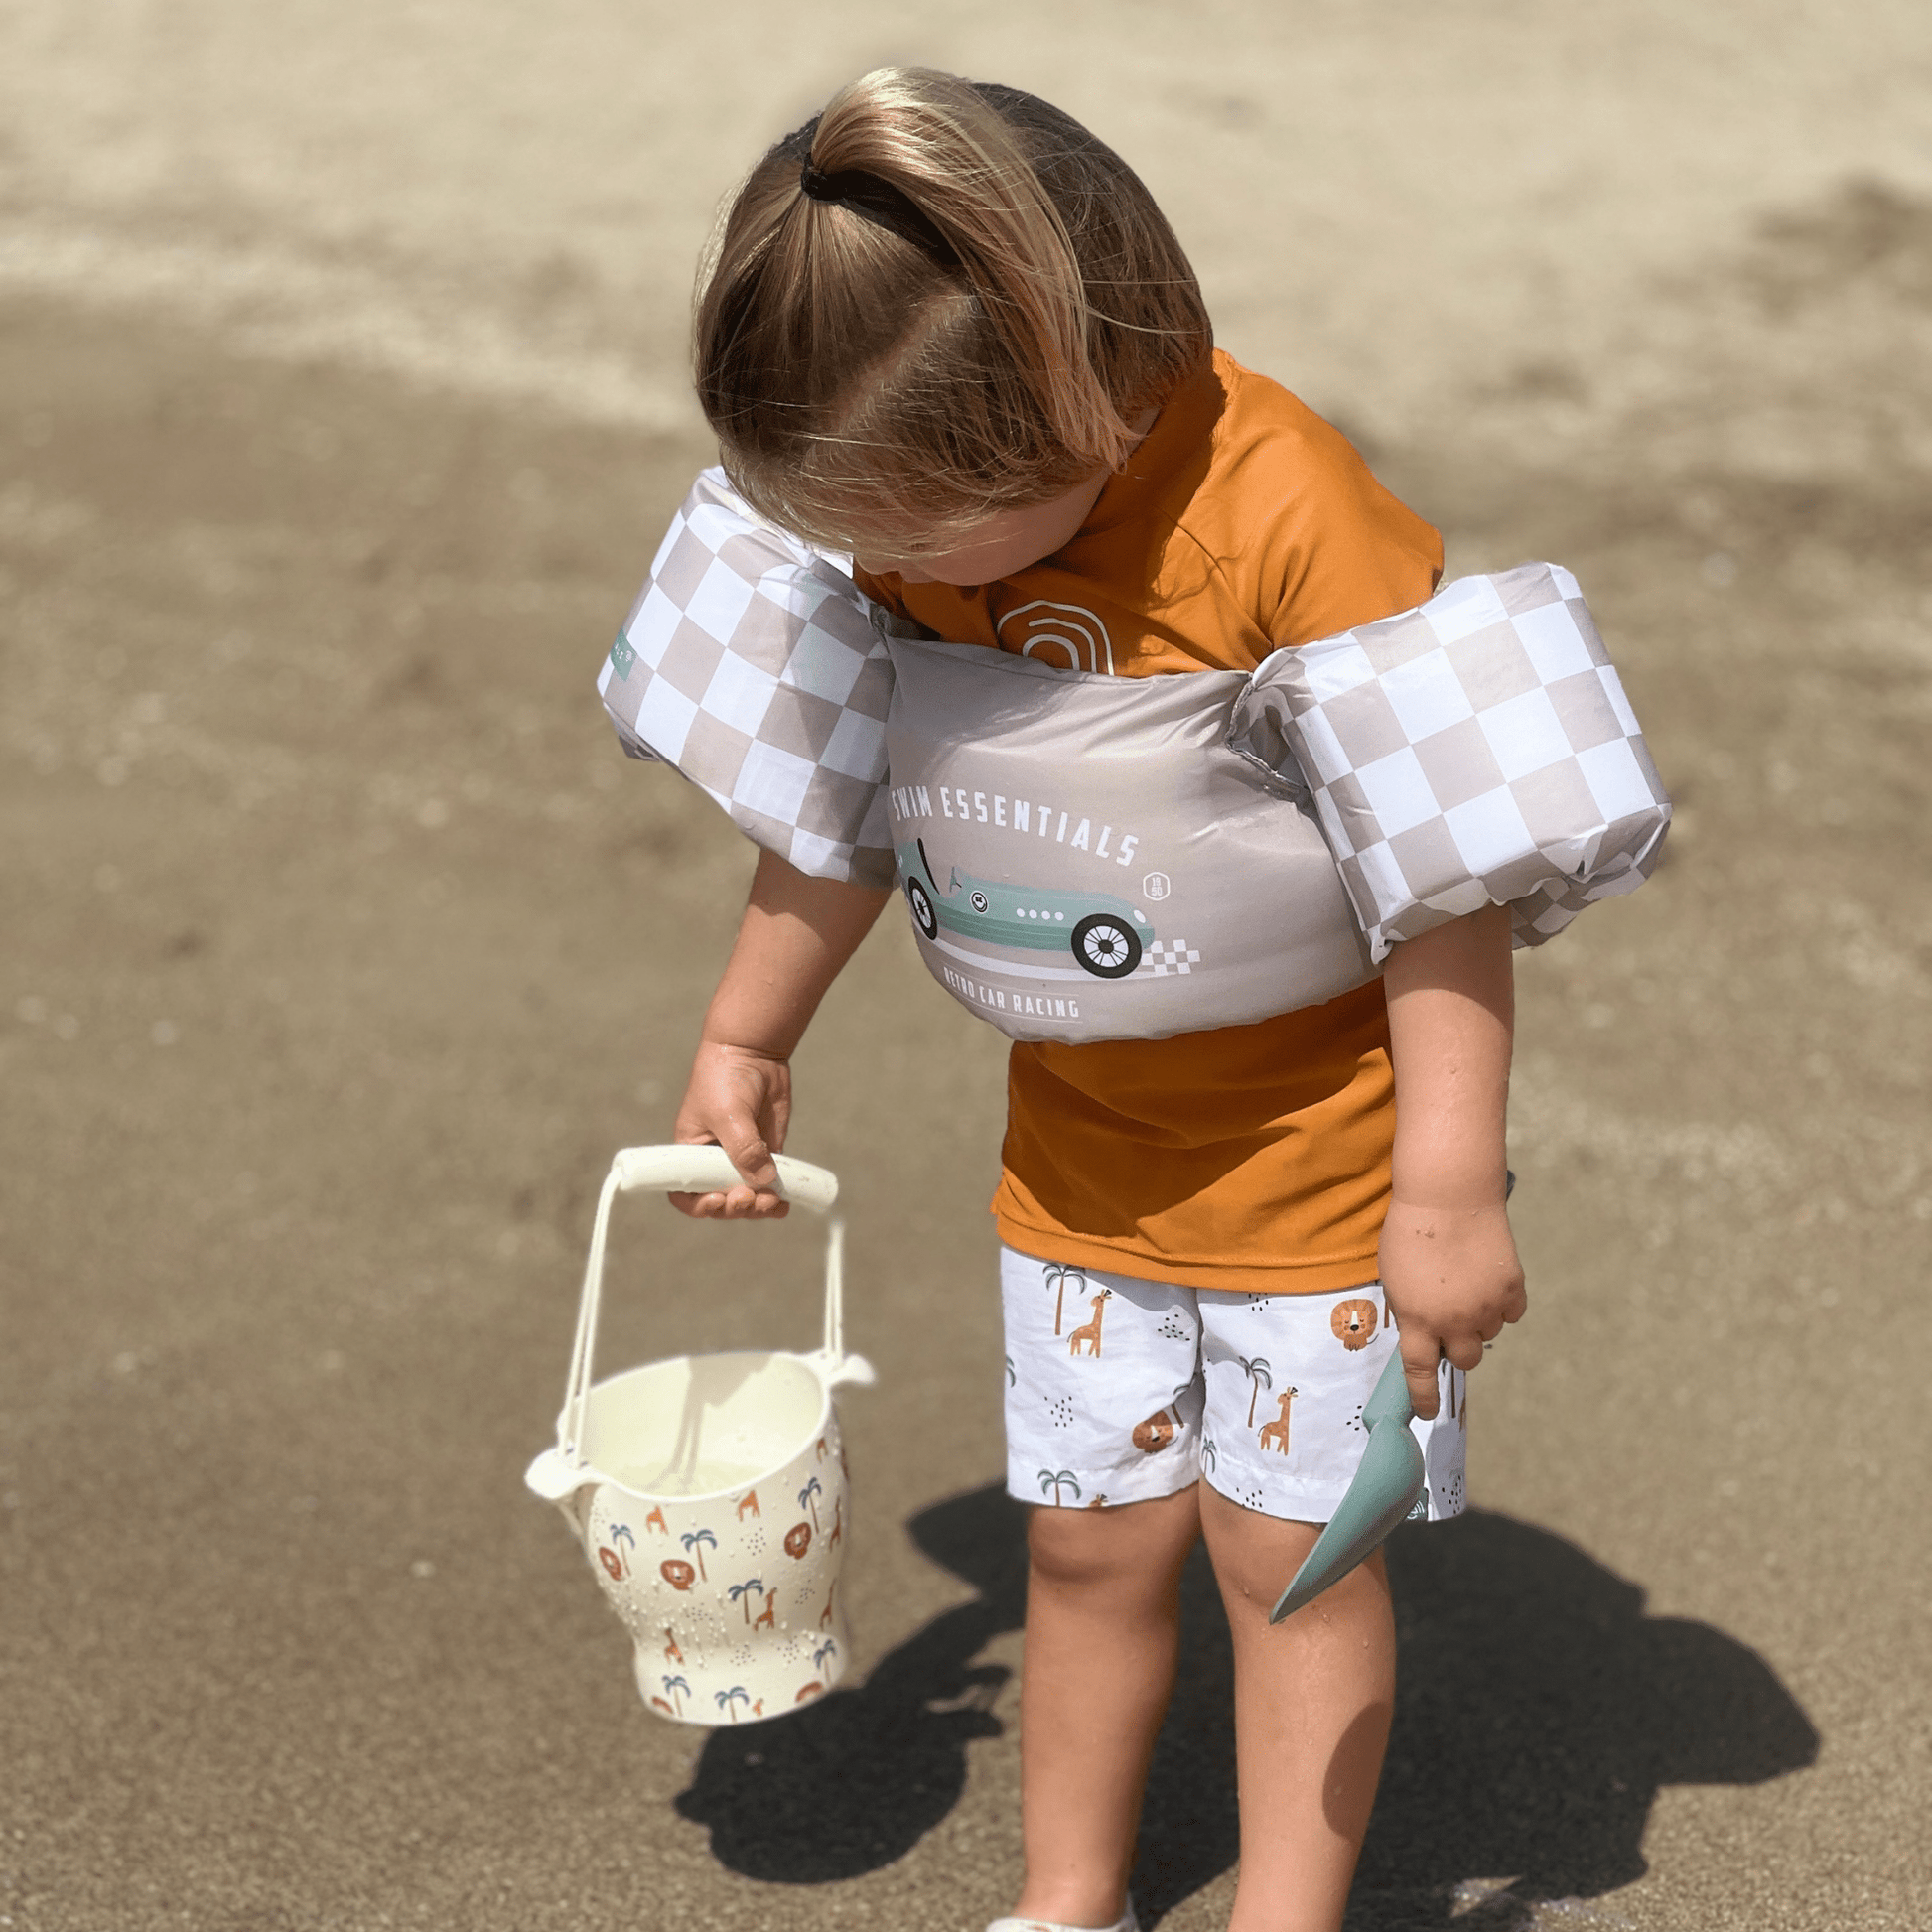 puddle-jumper-sand-check-2-6-jaar-swim-essentials-2